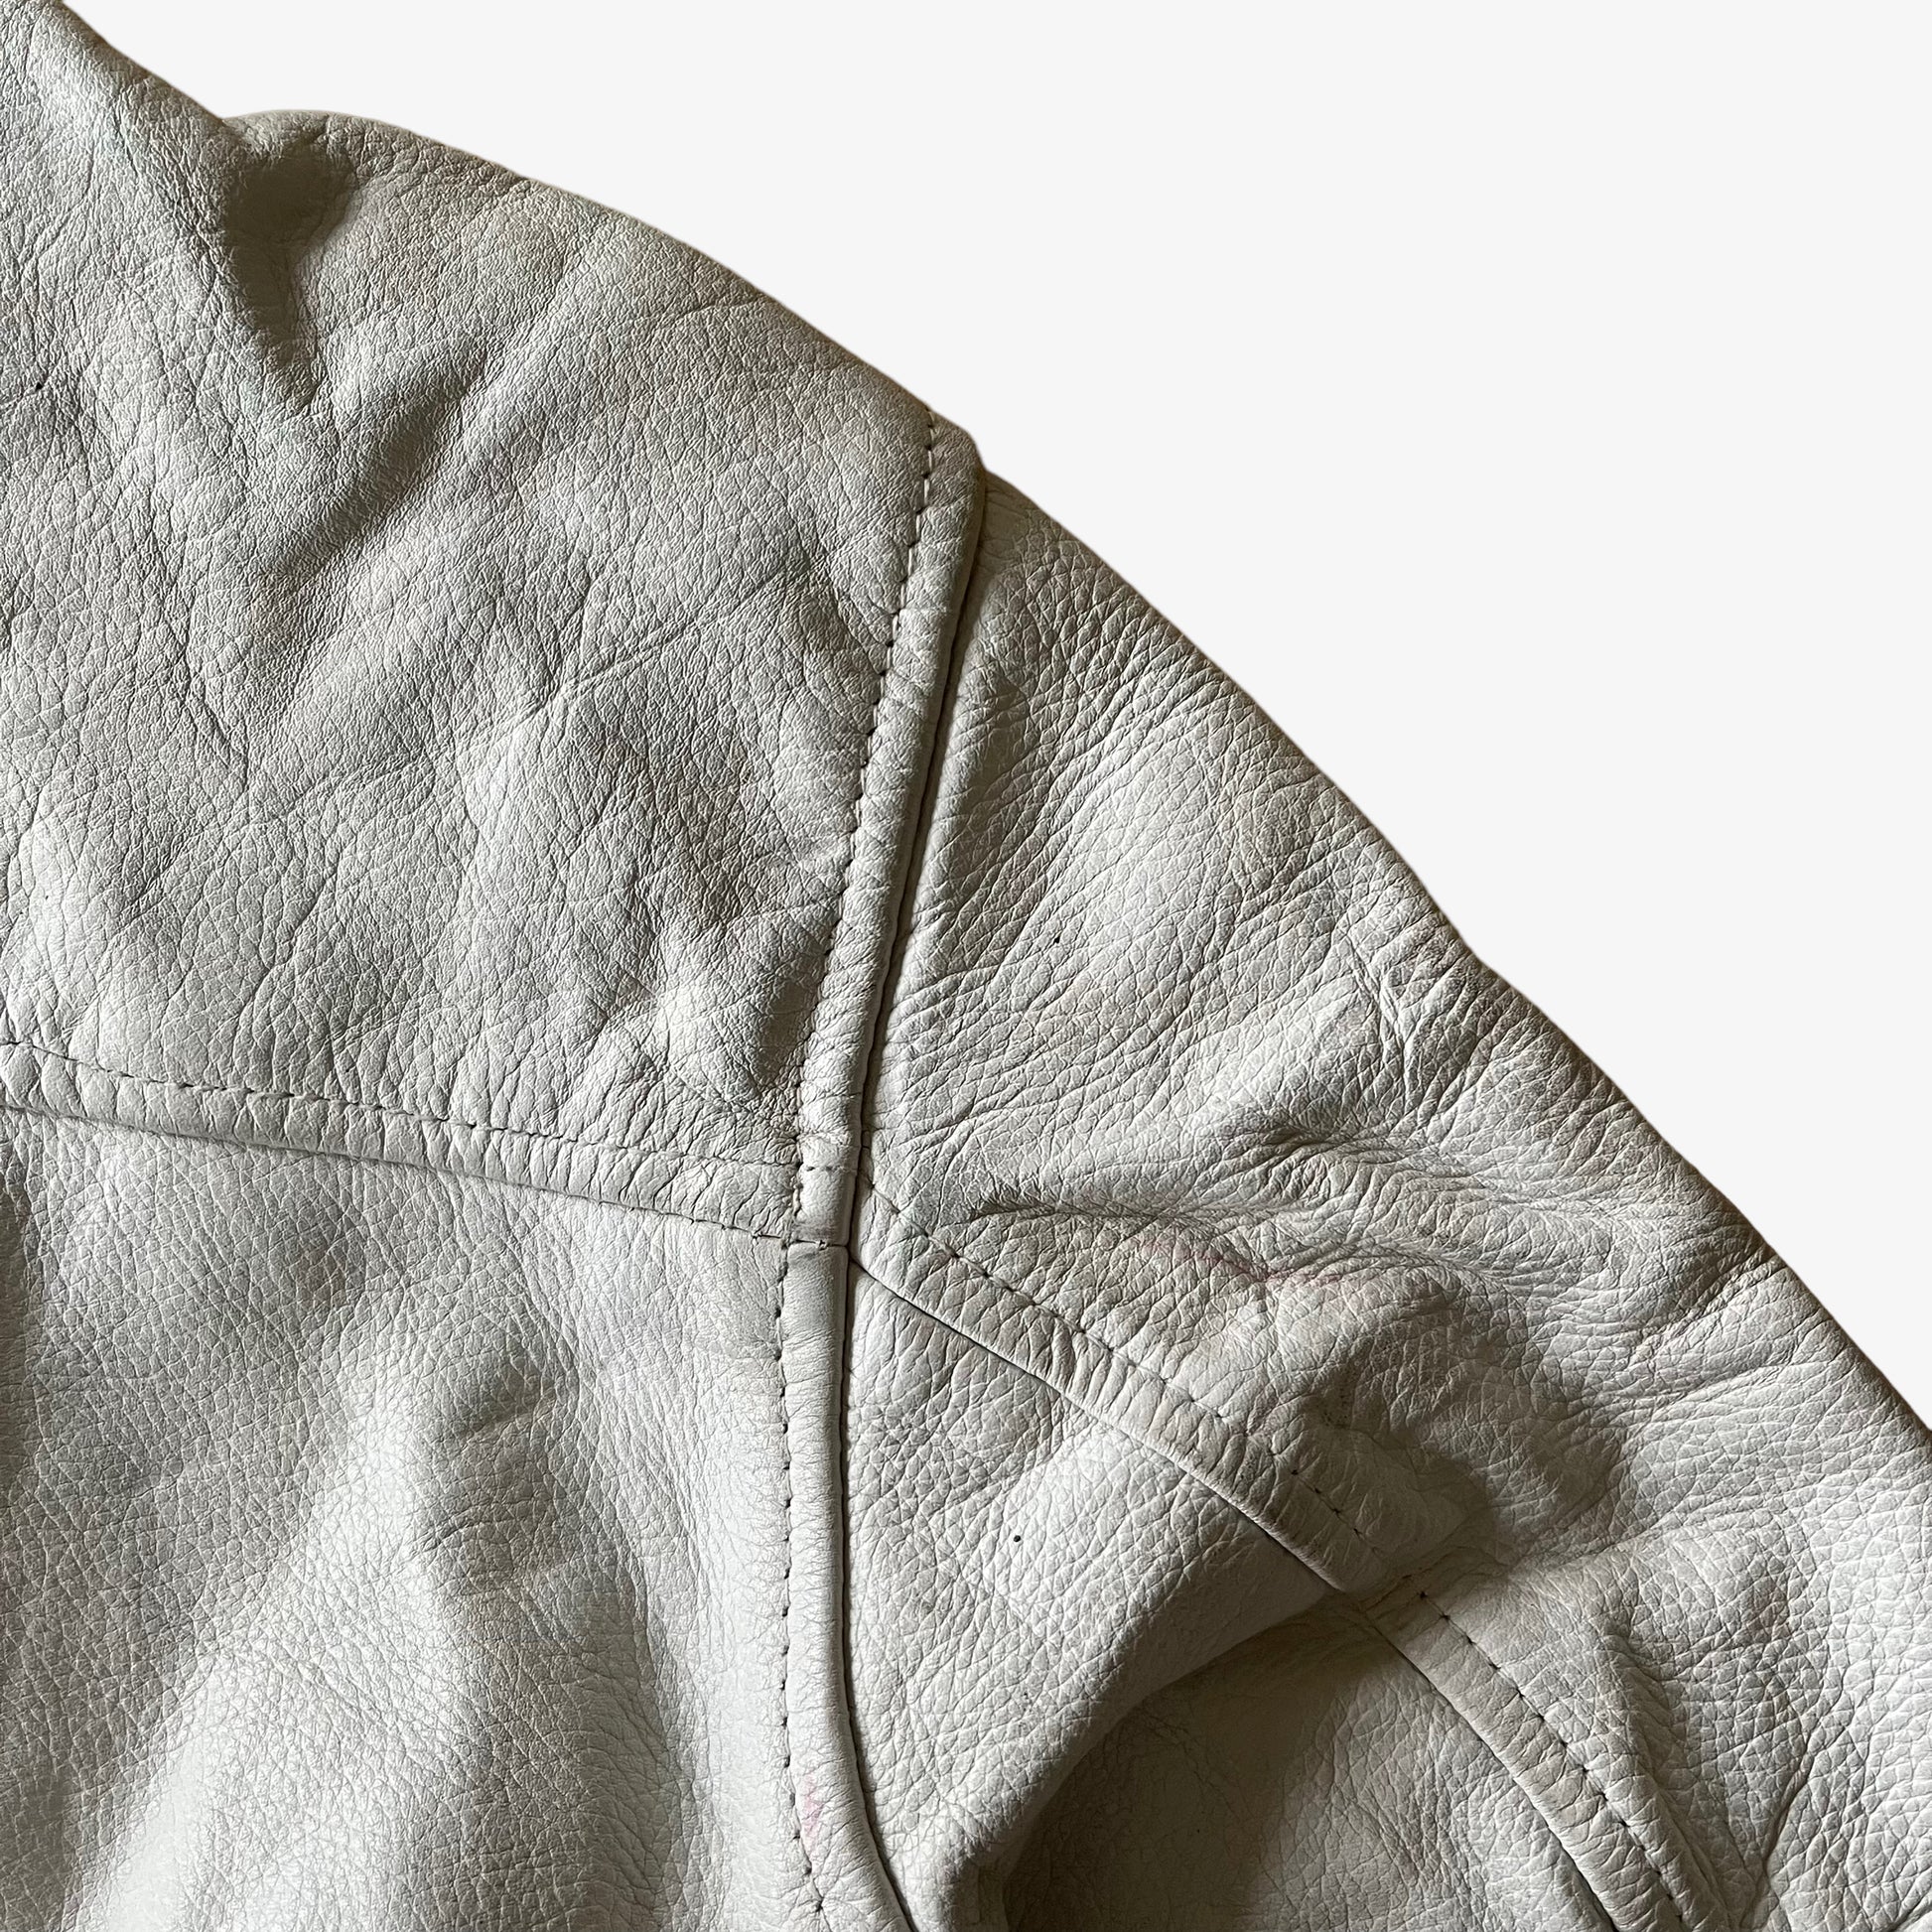 Vintage 90s Redskins White Leather Varsity Jacket Wear - Casspios Dream